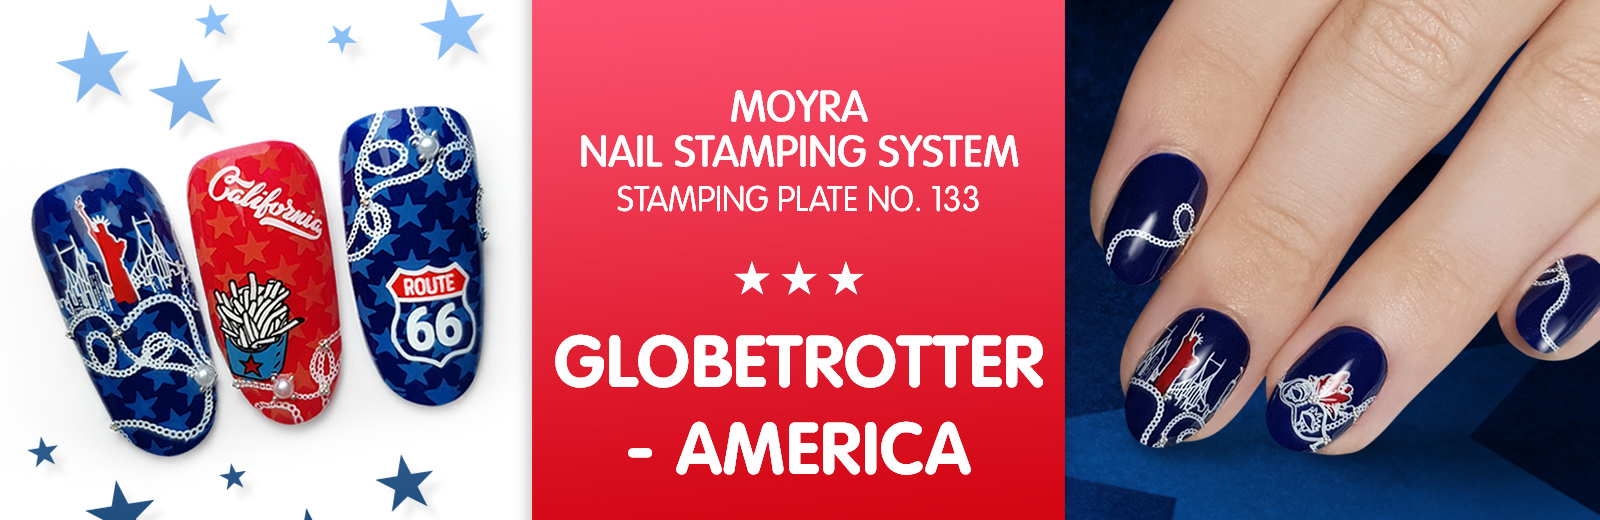 Moyra Stamping plate 133 Globetrotter-America